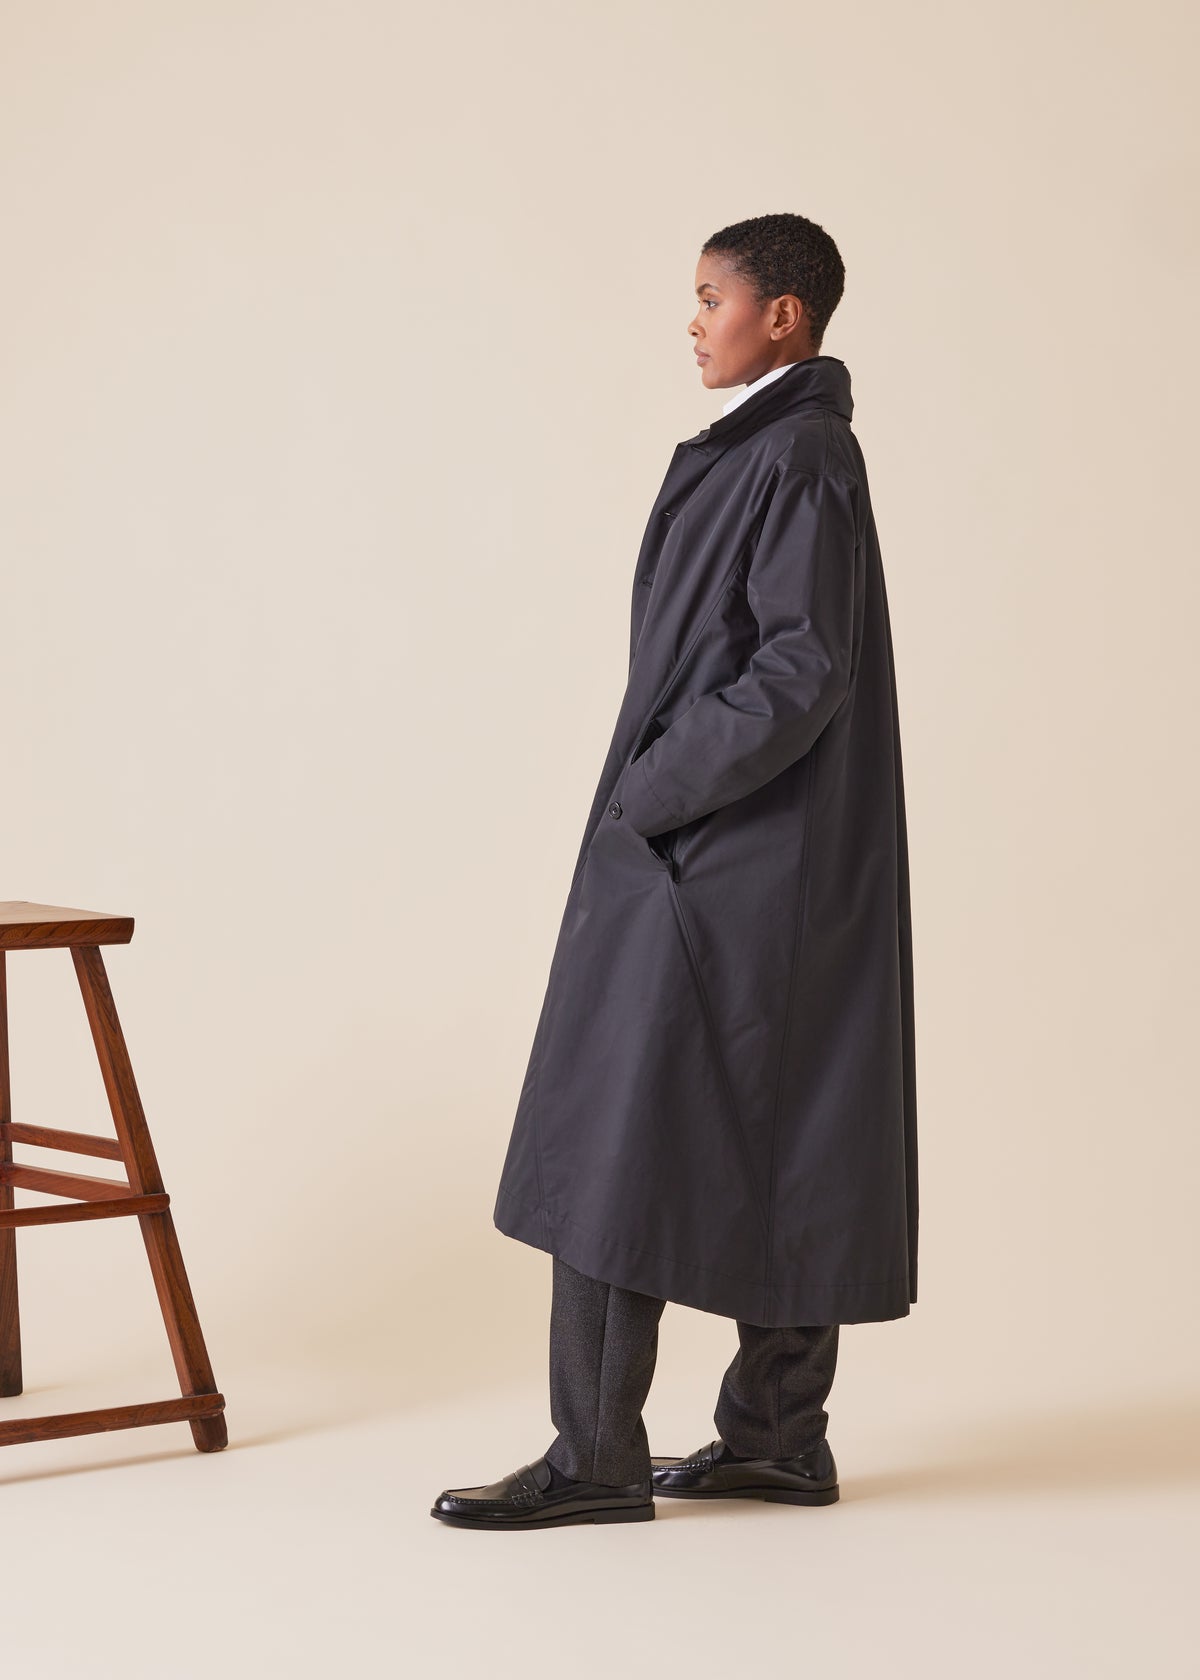 cotton mix caucasus raincoat with foldaway hood - full length